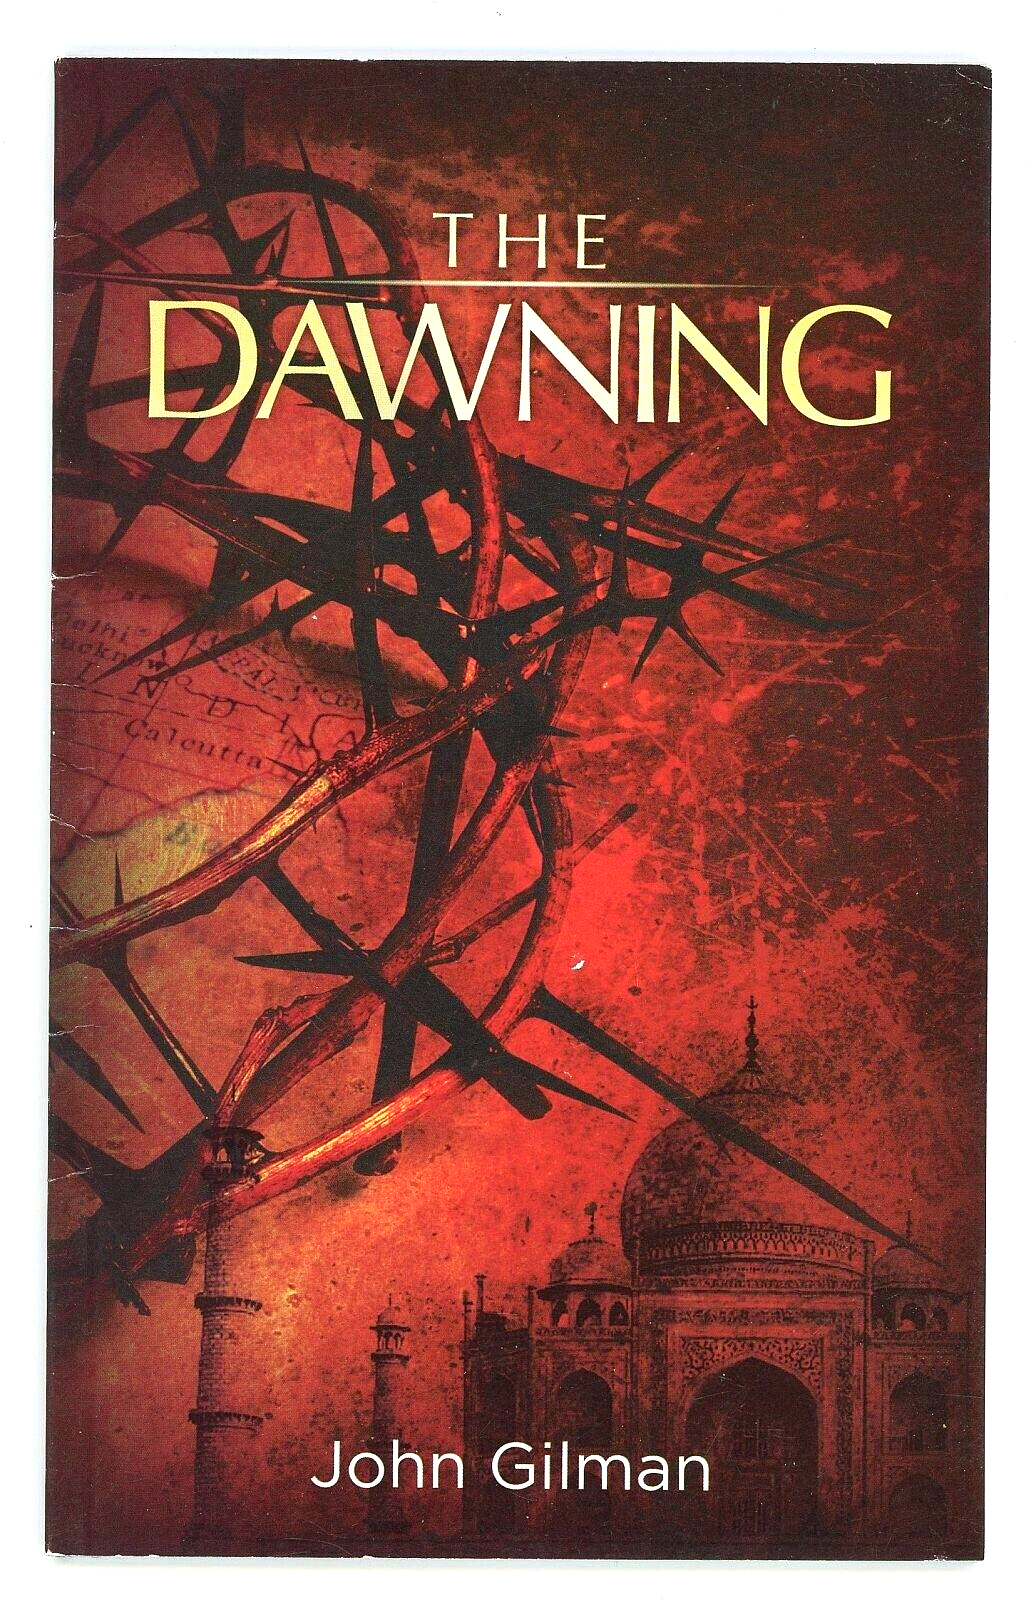 The Dawning by John Gilman